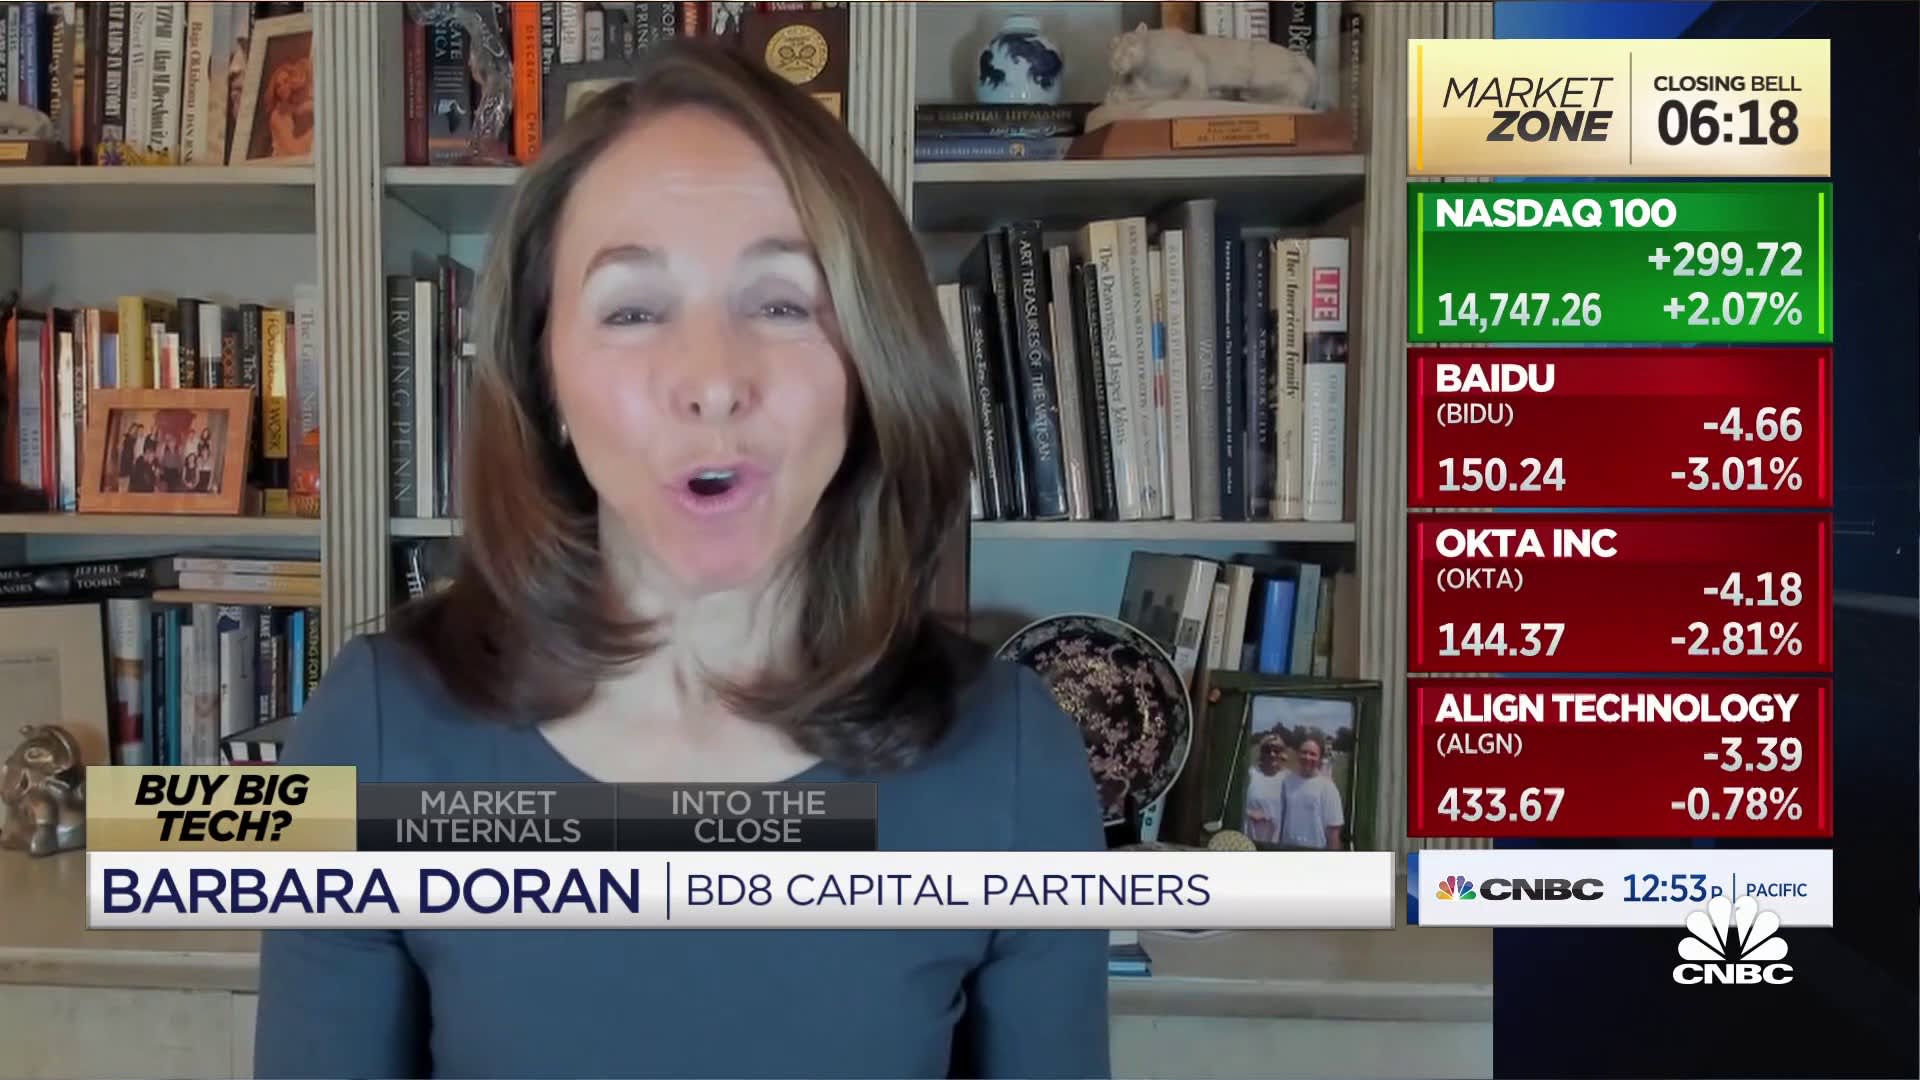 I’ve been adding since February, says BD8 Capital’s Barbara Doran